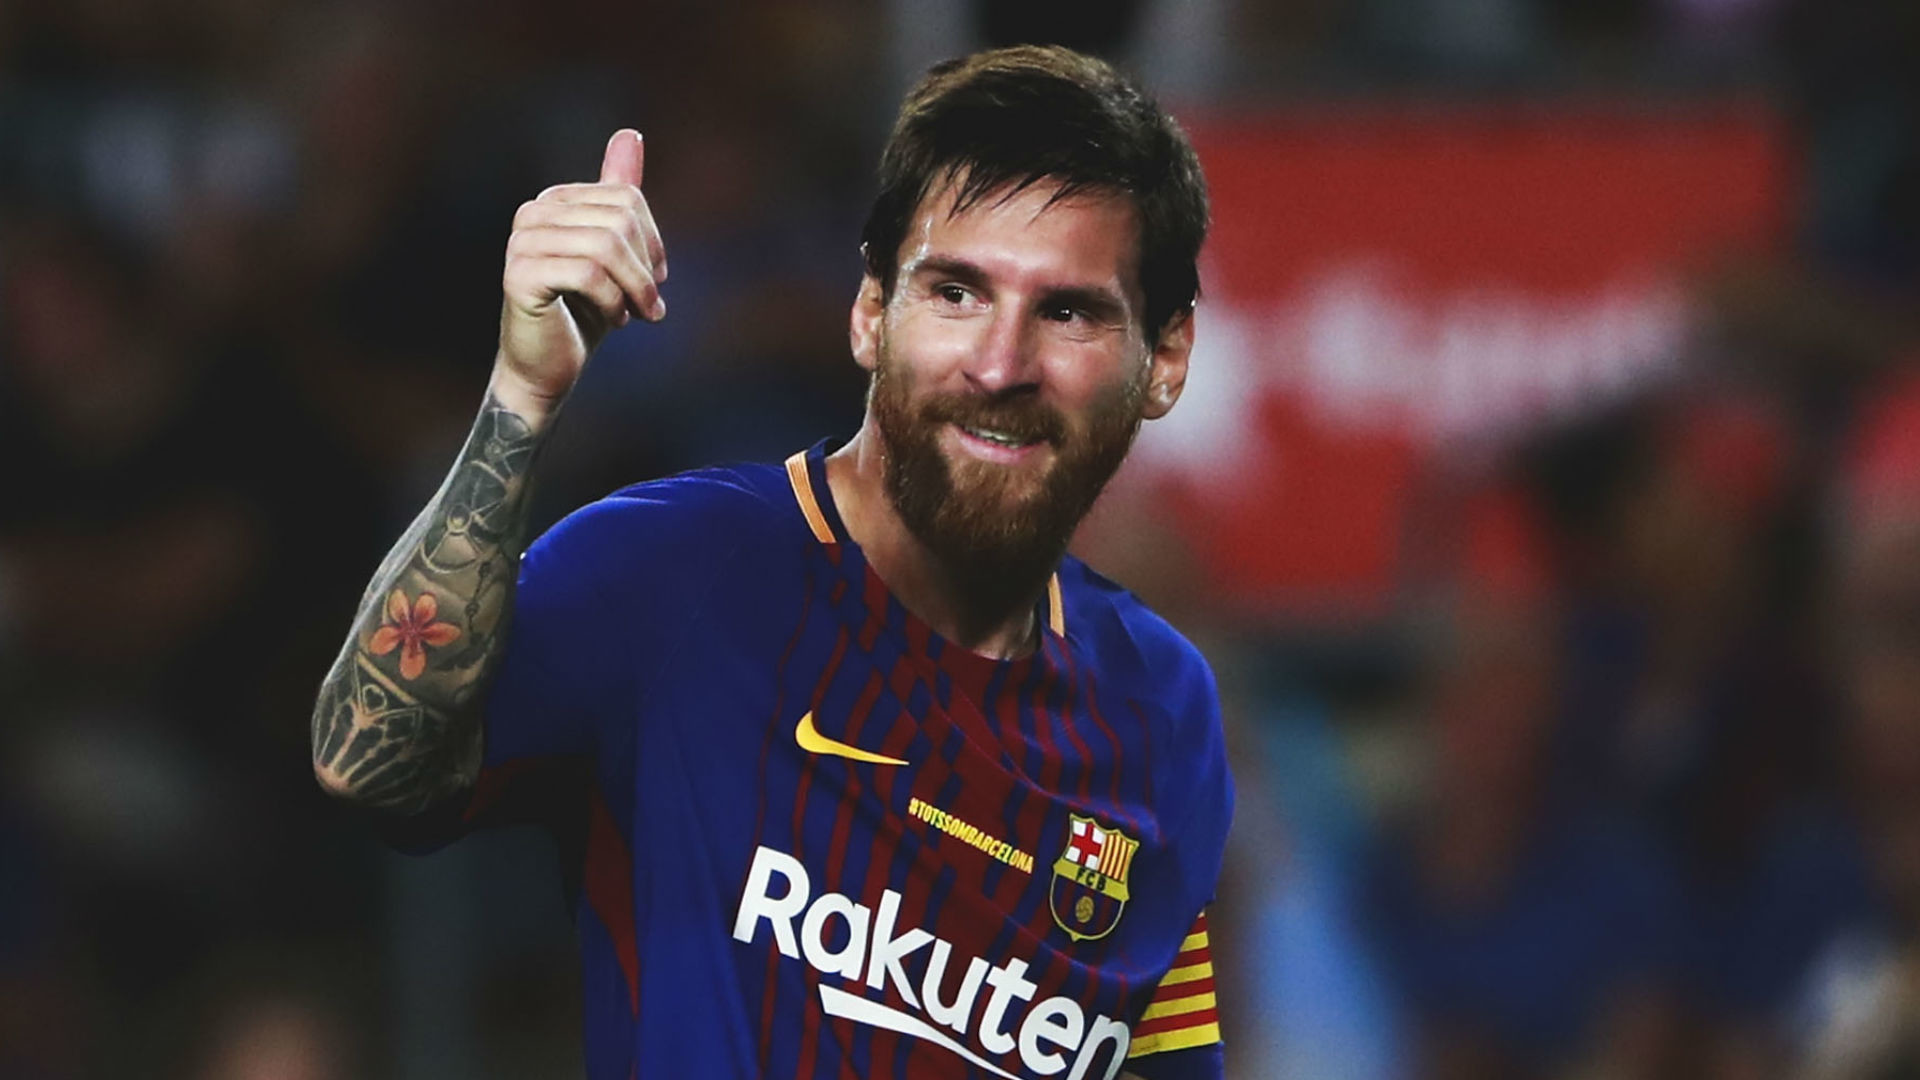 1920x1080  Lionel Messi Barcelona 2017. "